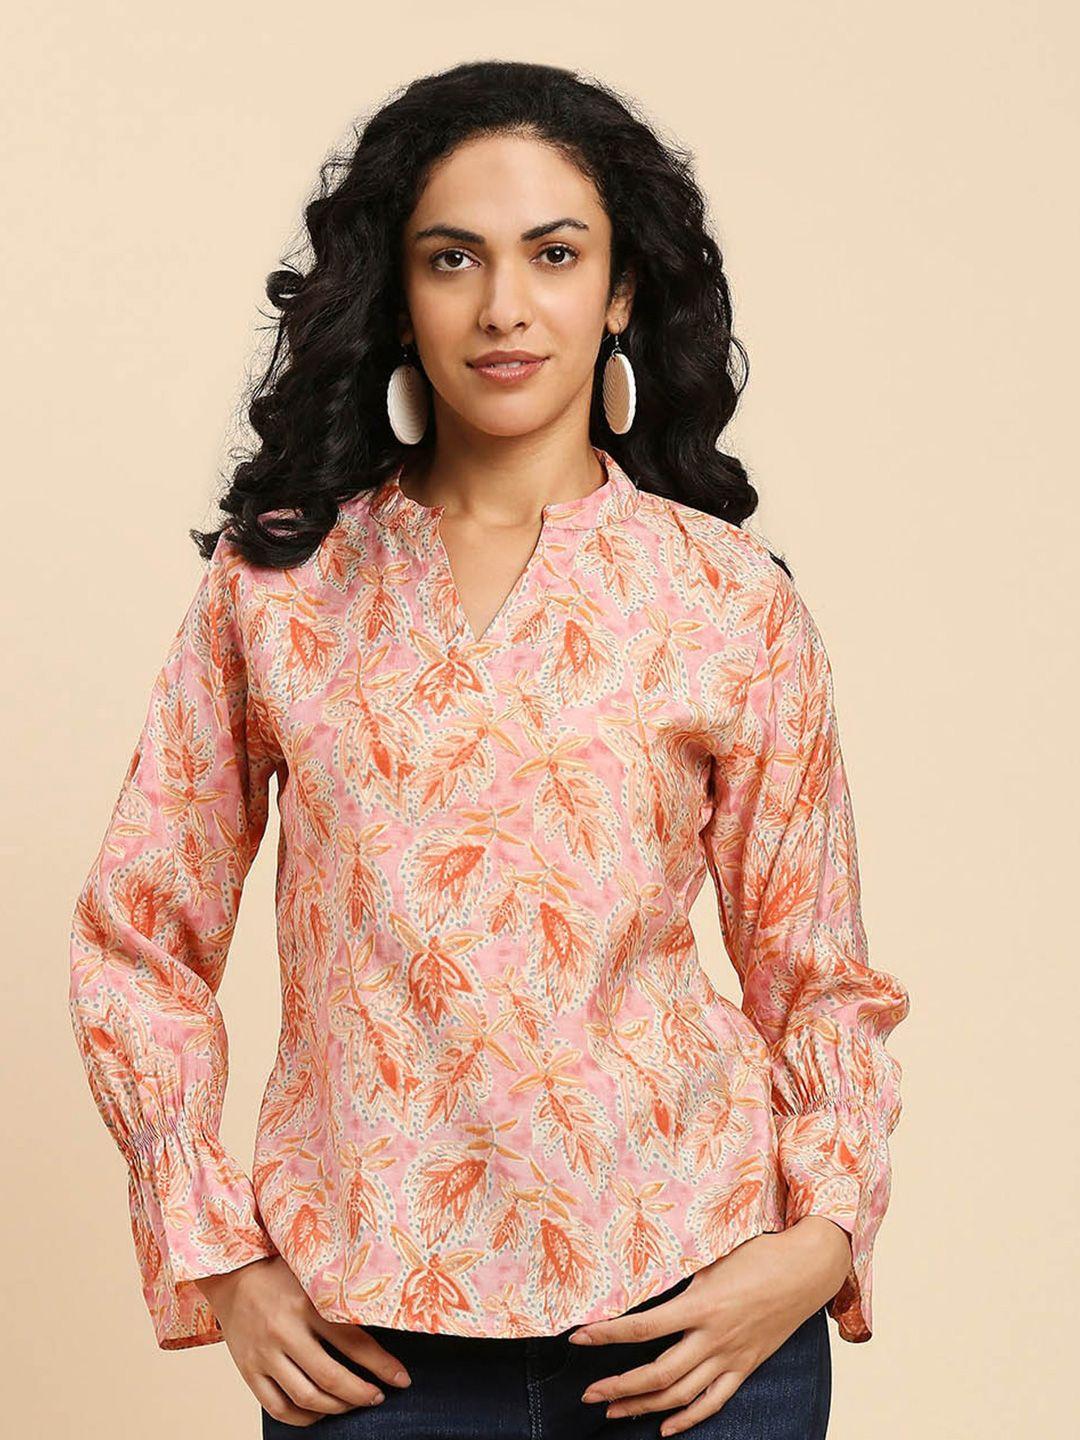 gufrina floral printed mandarin collar shirt style top